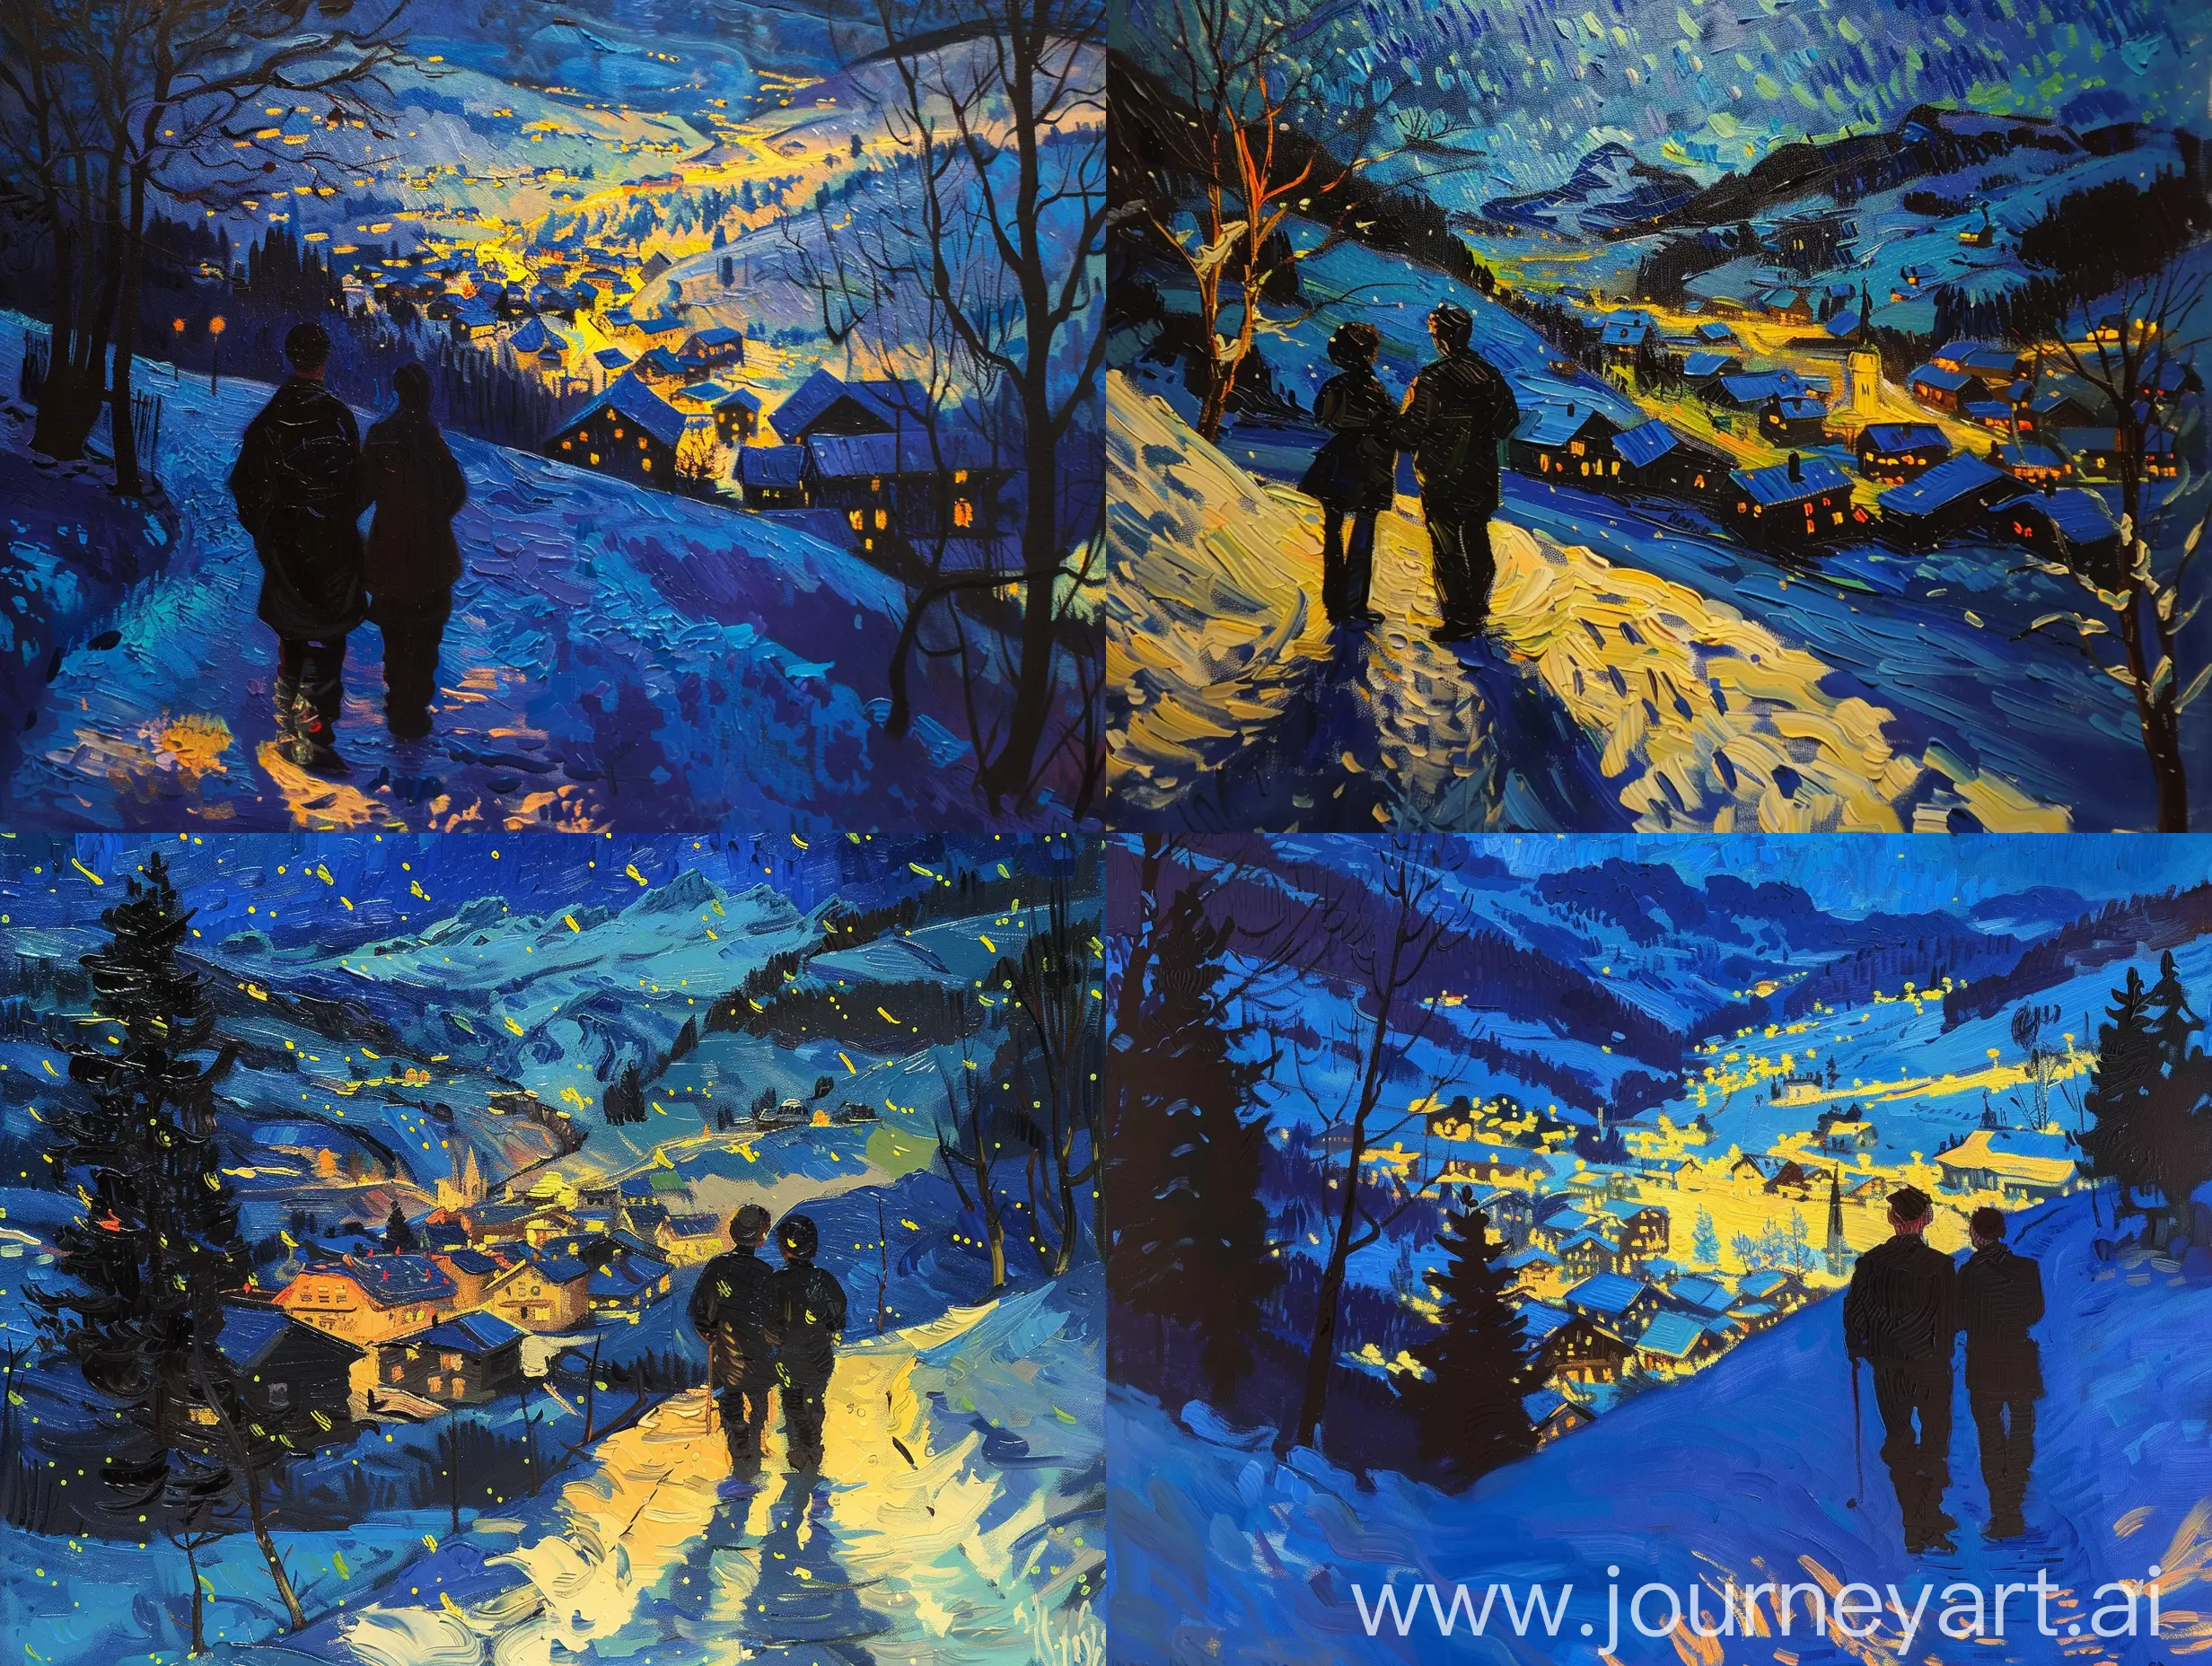 Snowy-Night-Scene-with-Silhouetted-Figures-Overlooking-Illuminated-Village-Van-Gogh-Style-Oil-Painting